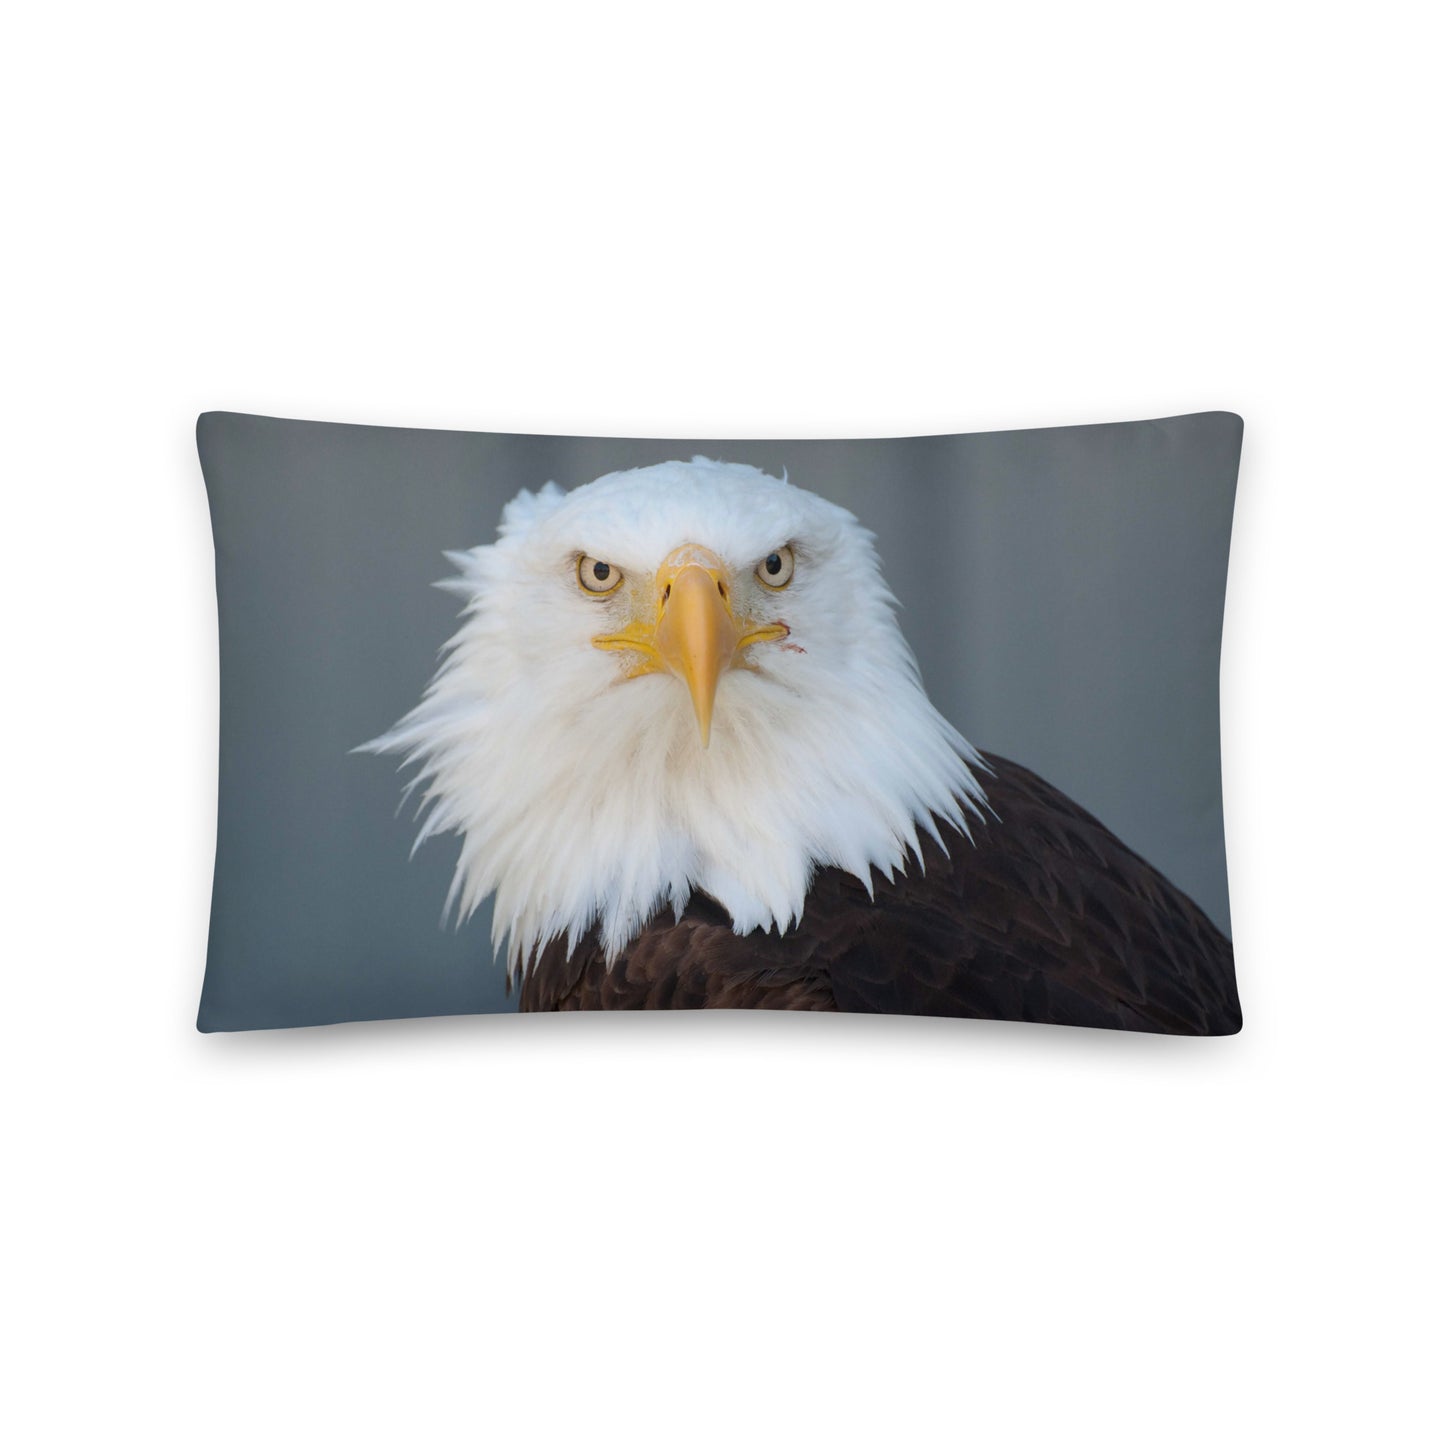 Throw Pillow with a Bald Eagle Print